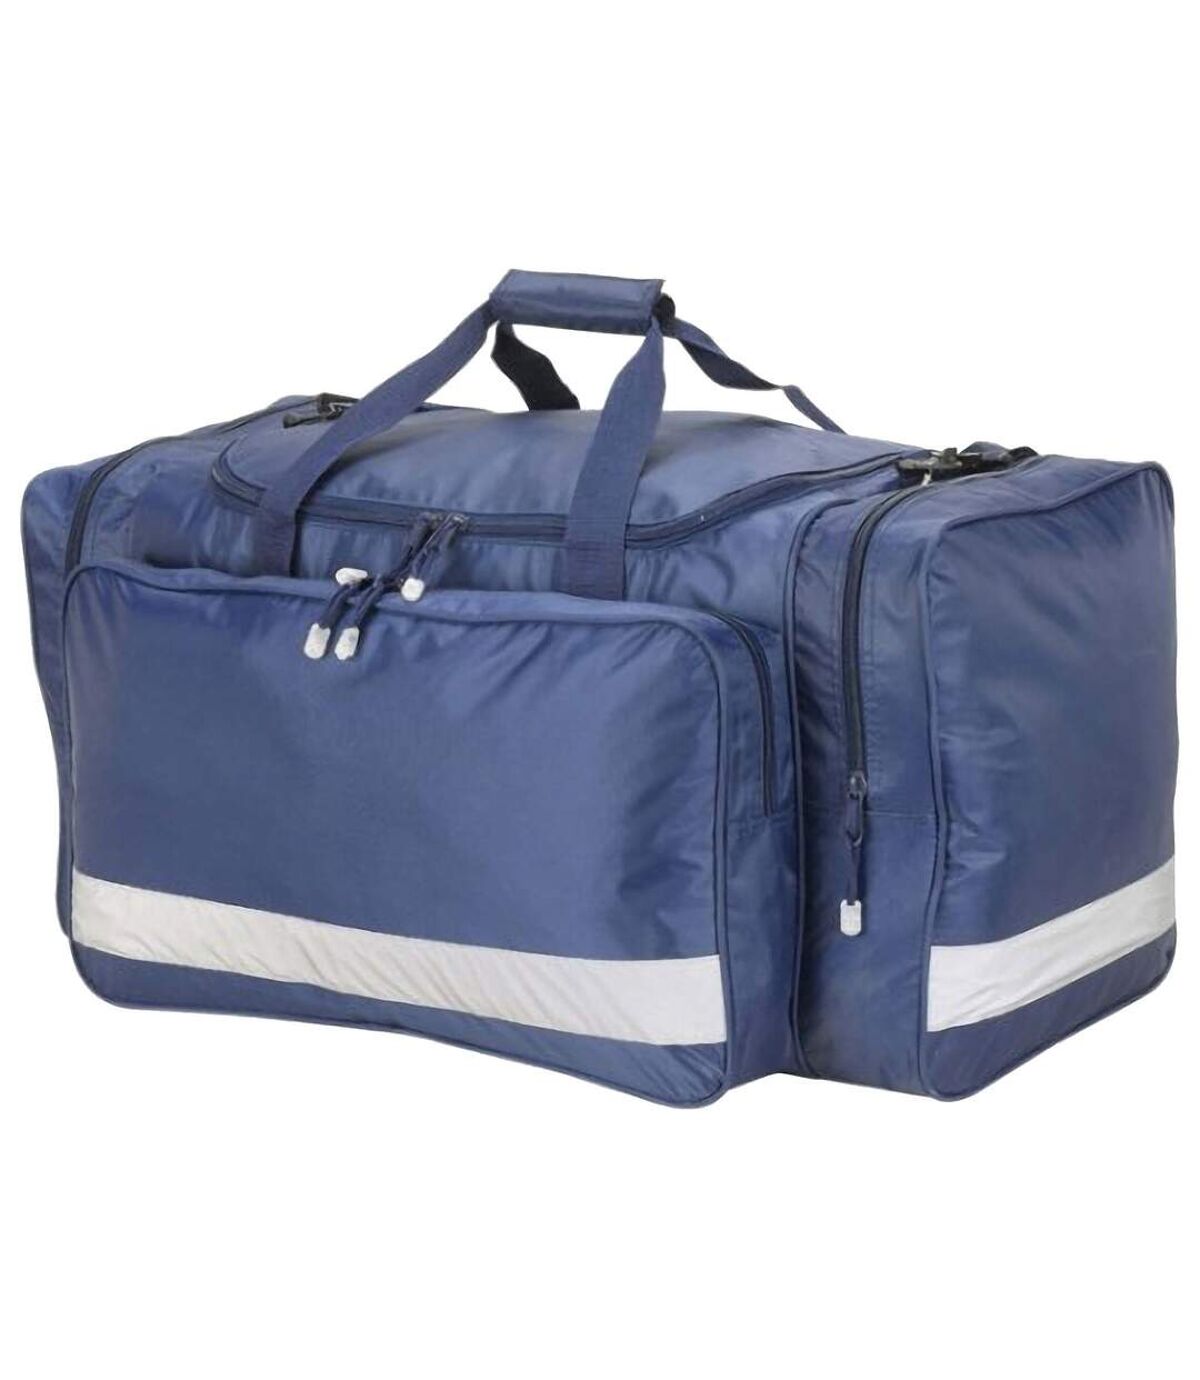 Shugon Glasgow Jumbo Kit Holdall Duffel Bag - 75 Liters (Pack of 2) (Navy Blue) (One Size)